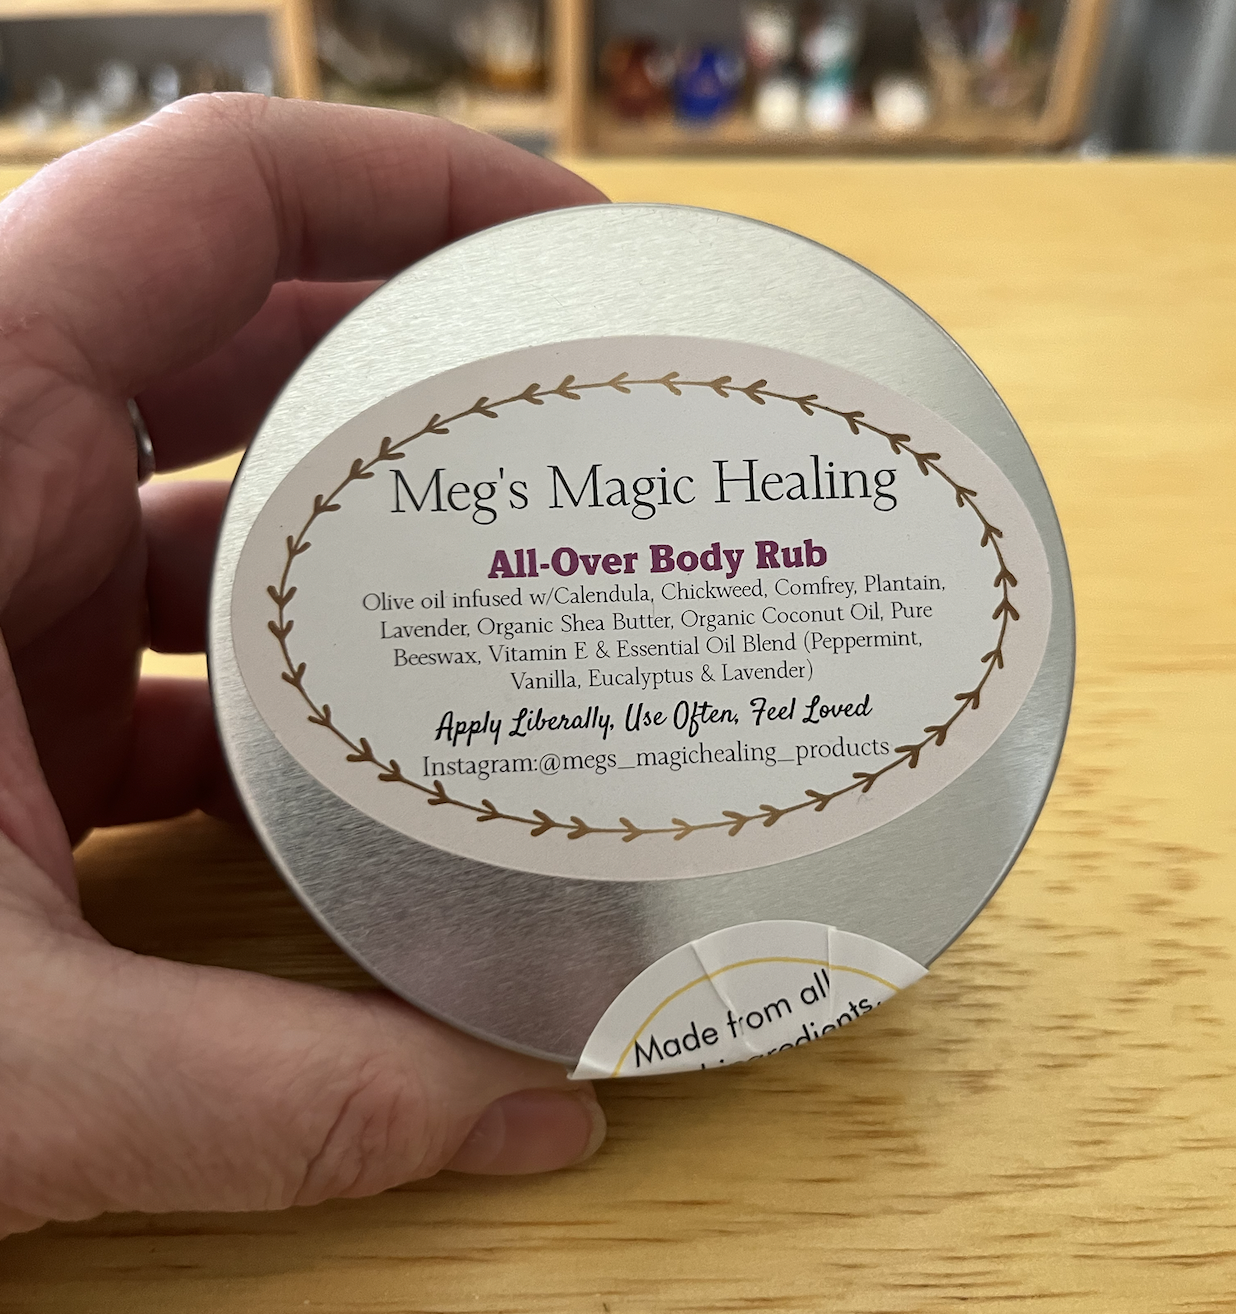 All-Over Body Rub - Megan's Magic Healing 